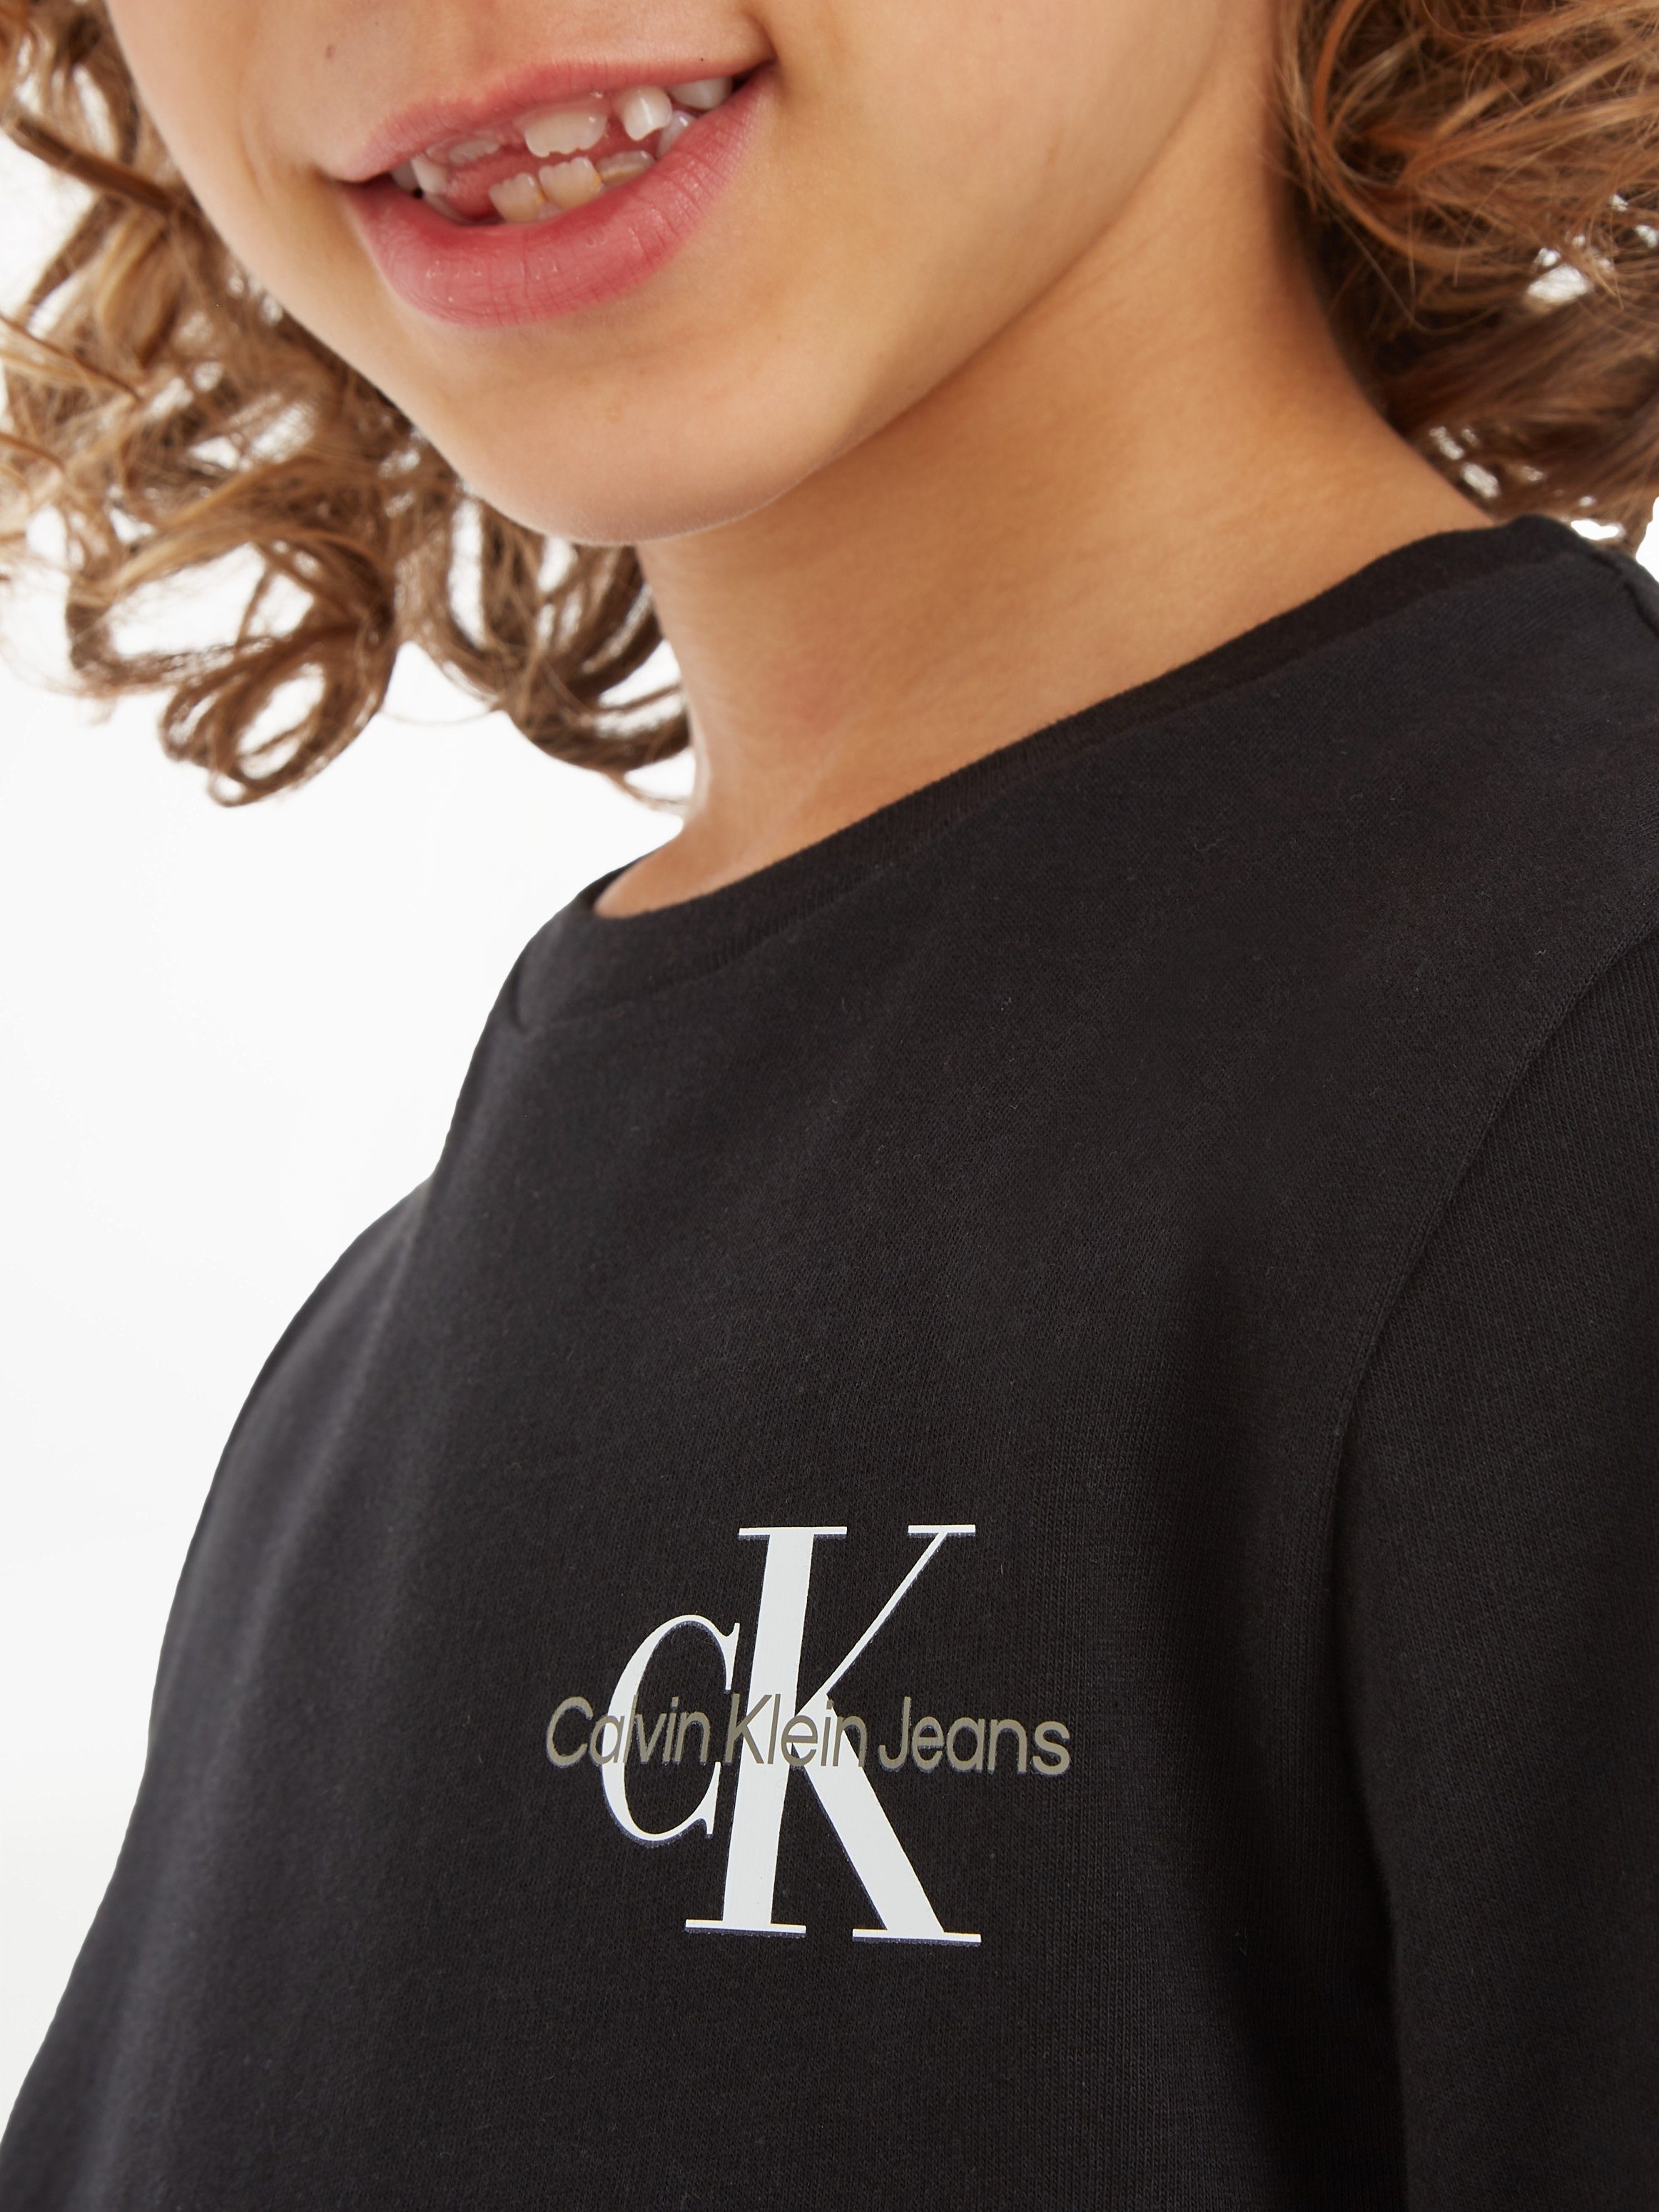 Calvin Klein Jeans TOP CHEST T-Shirt Black Ck MONOGRAM